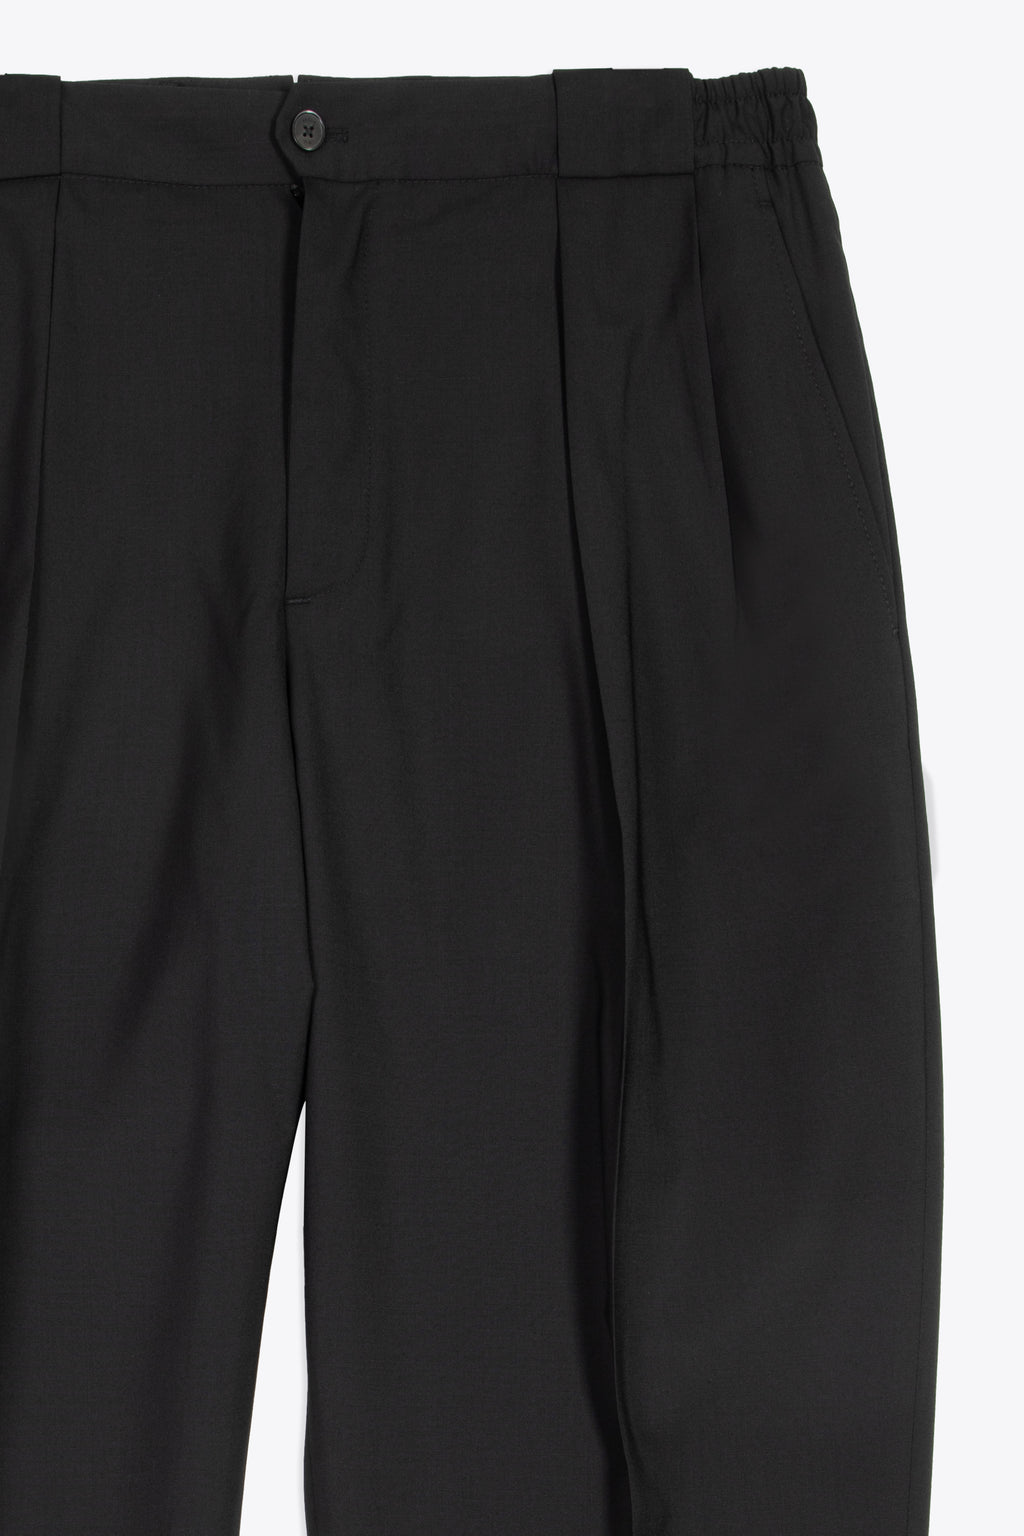 alt-image__Black-tailored-wool-pleated-cropped-pant---Portobellos